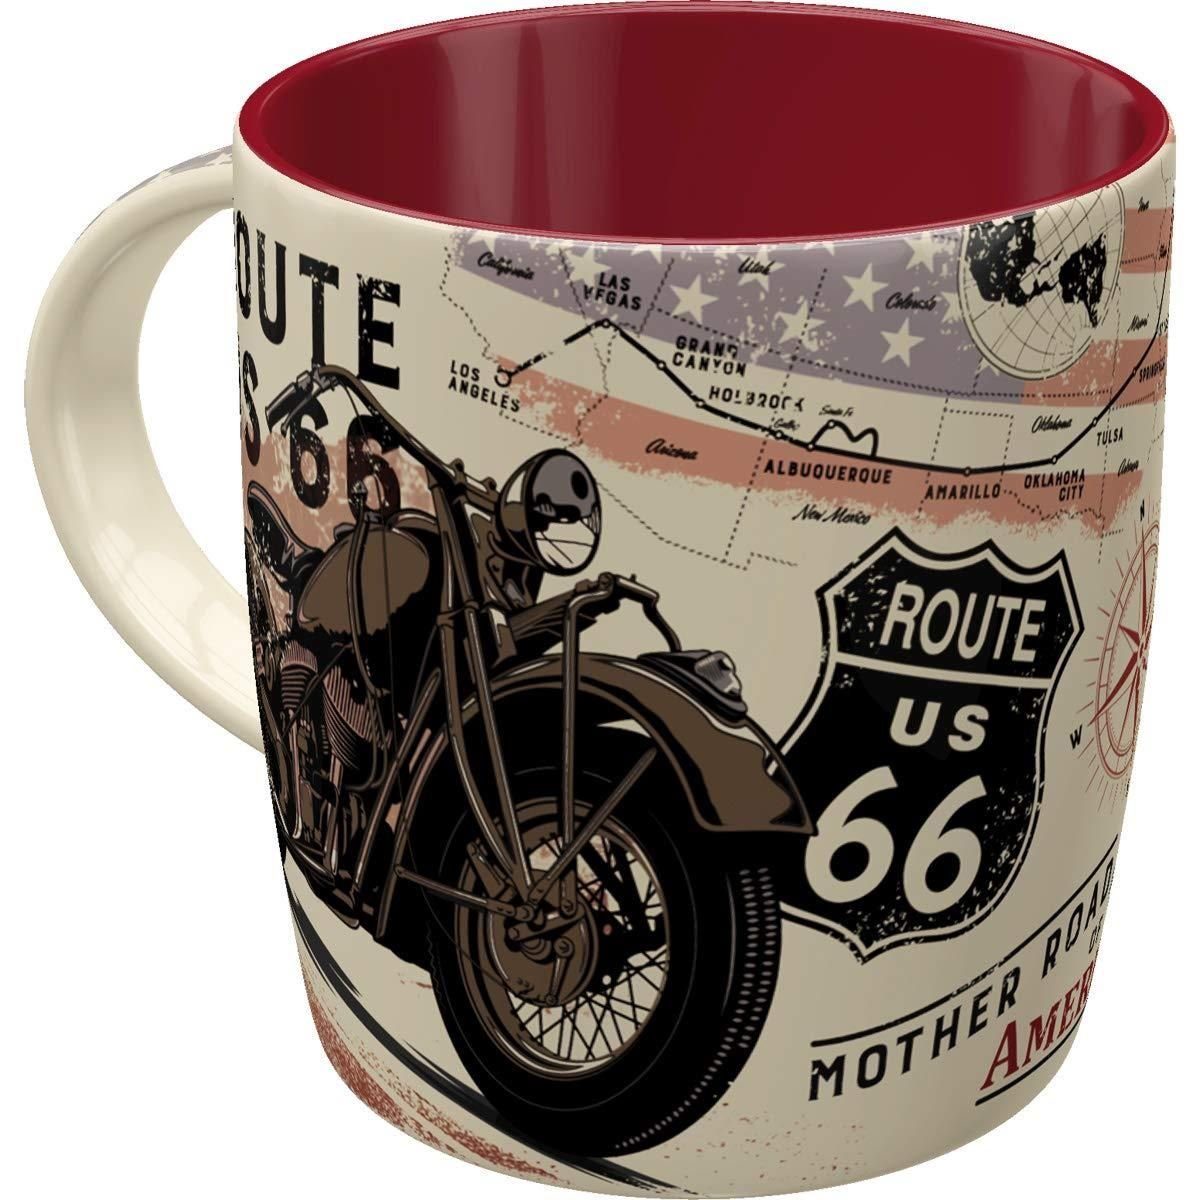 Nostalgic-Art Tasse Highways - US Map Bike - Kaffeetasse 66 Route